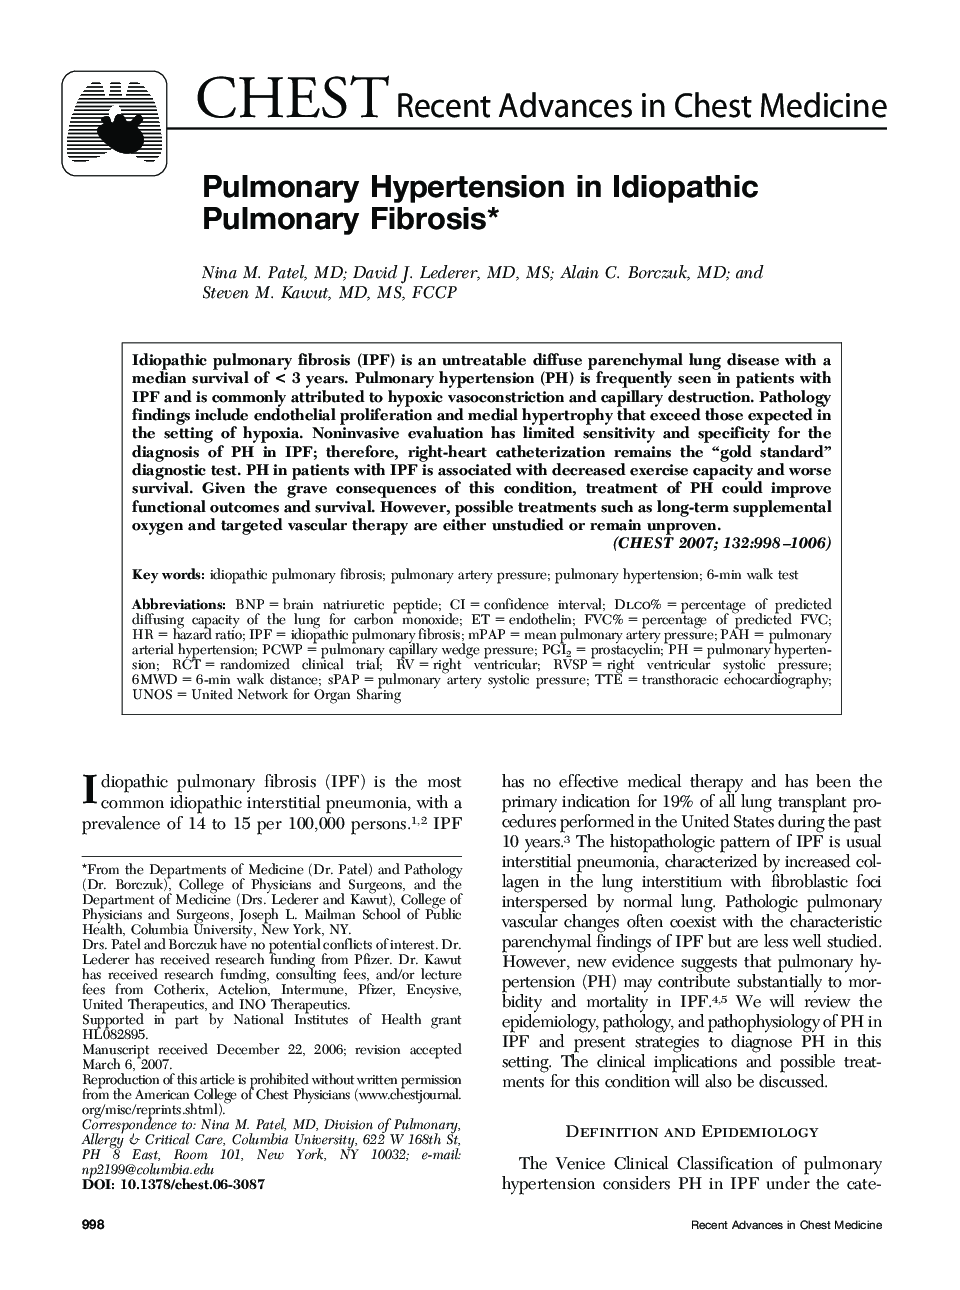 Pulmonary Hypertension in Idiopathic Pulmonary Fibrosis 